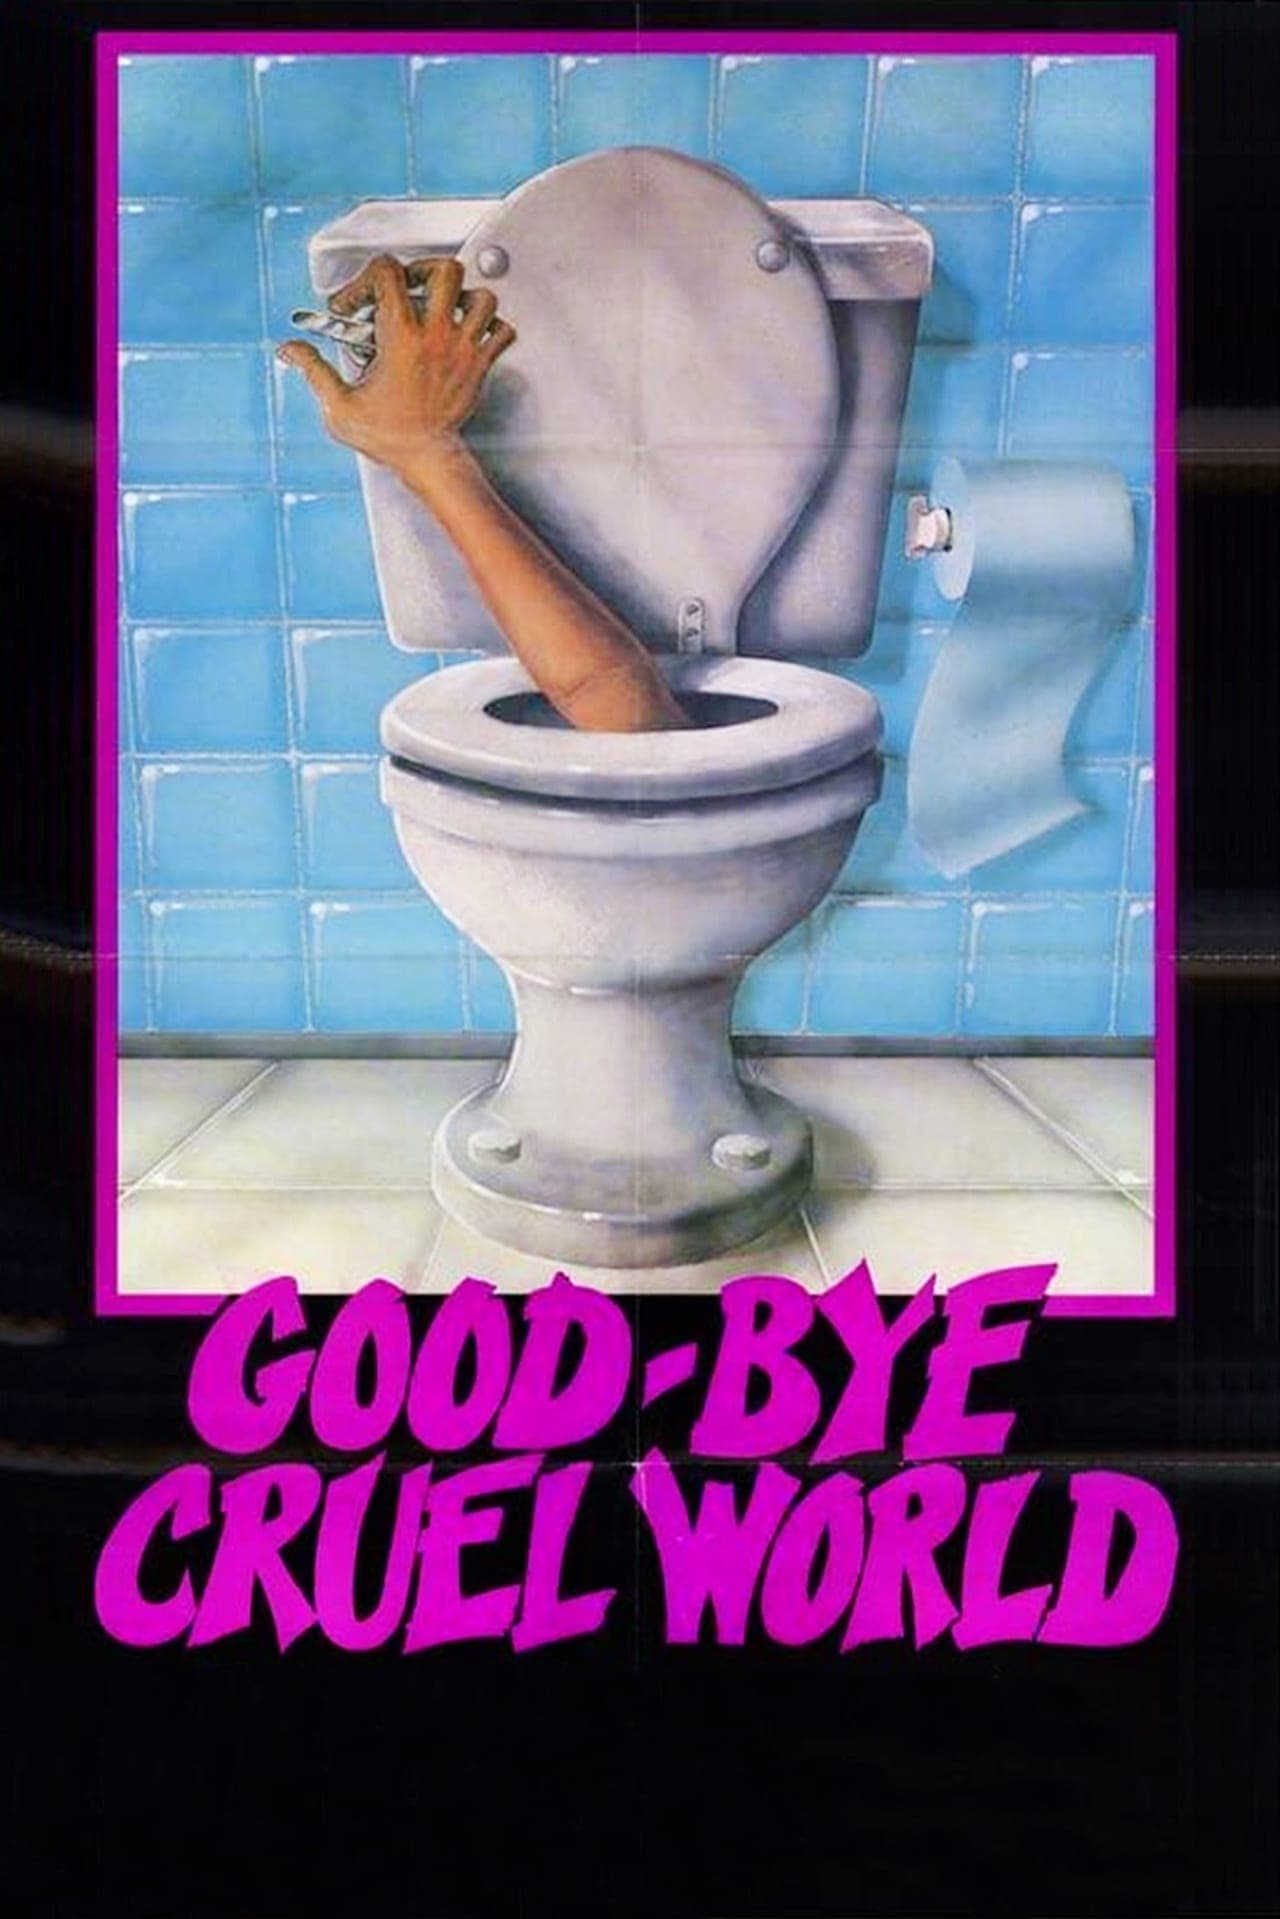 Good-bye Cruel World (1983)